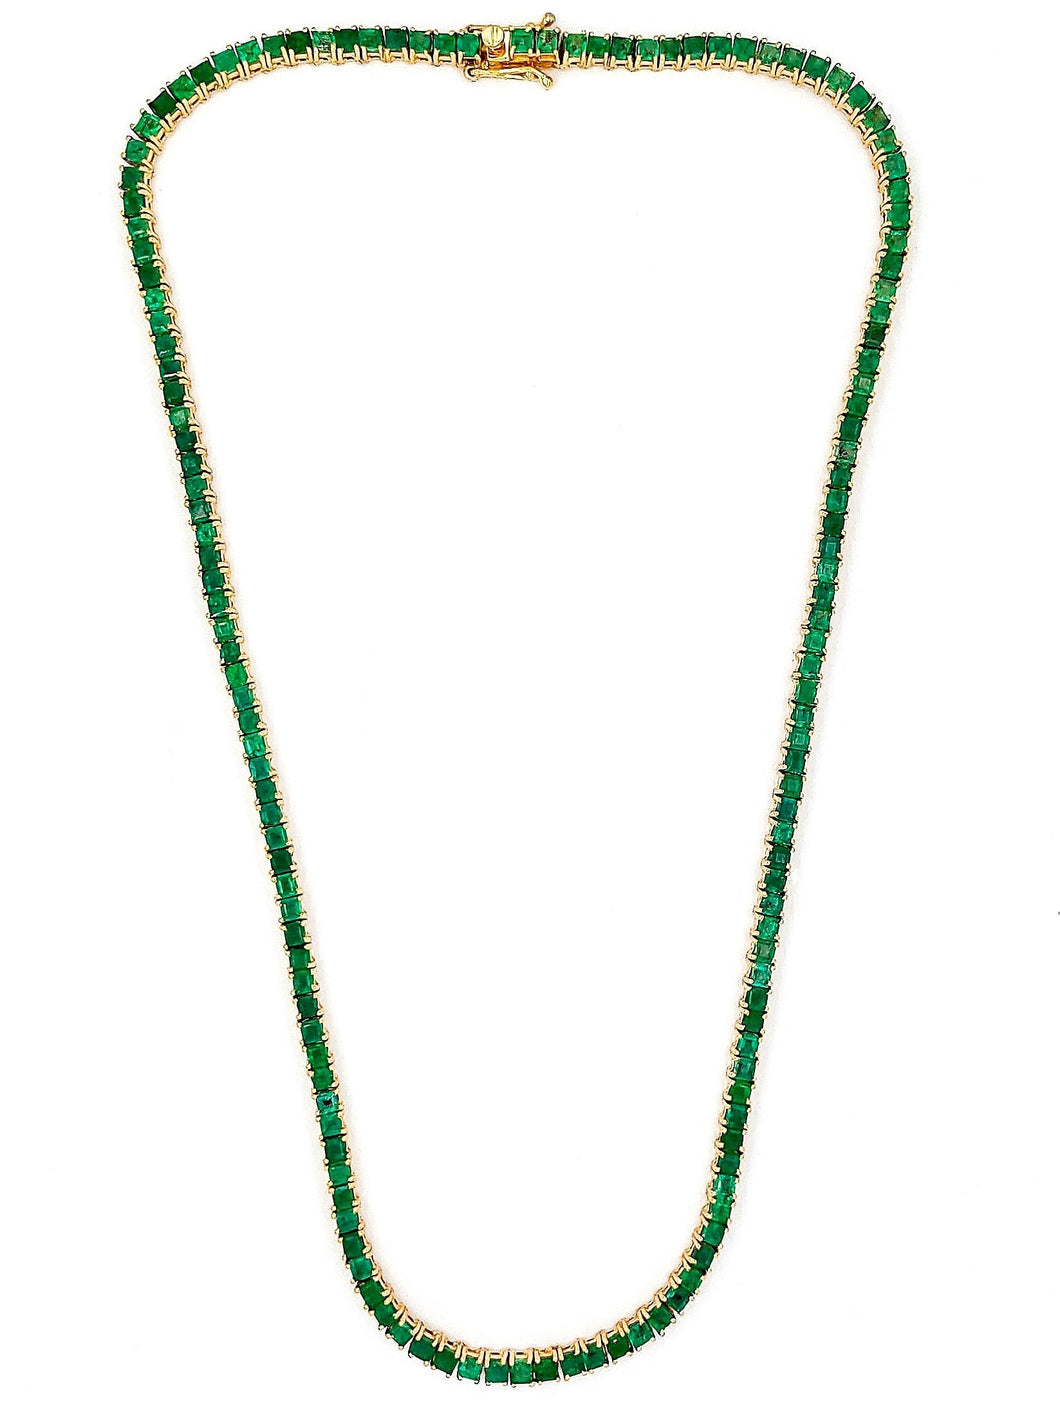 16 Ct Princess cut Emerald Tennis Necklace in 14K gold